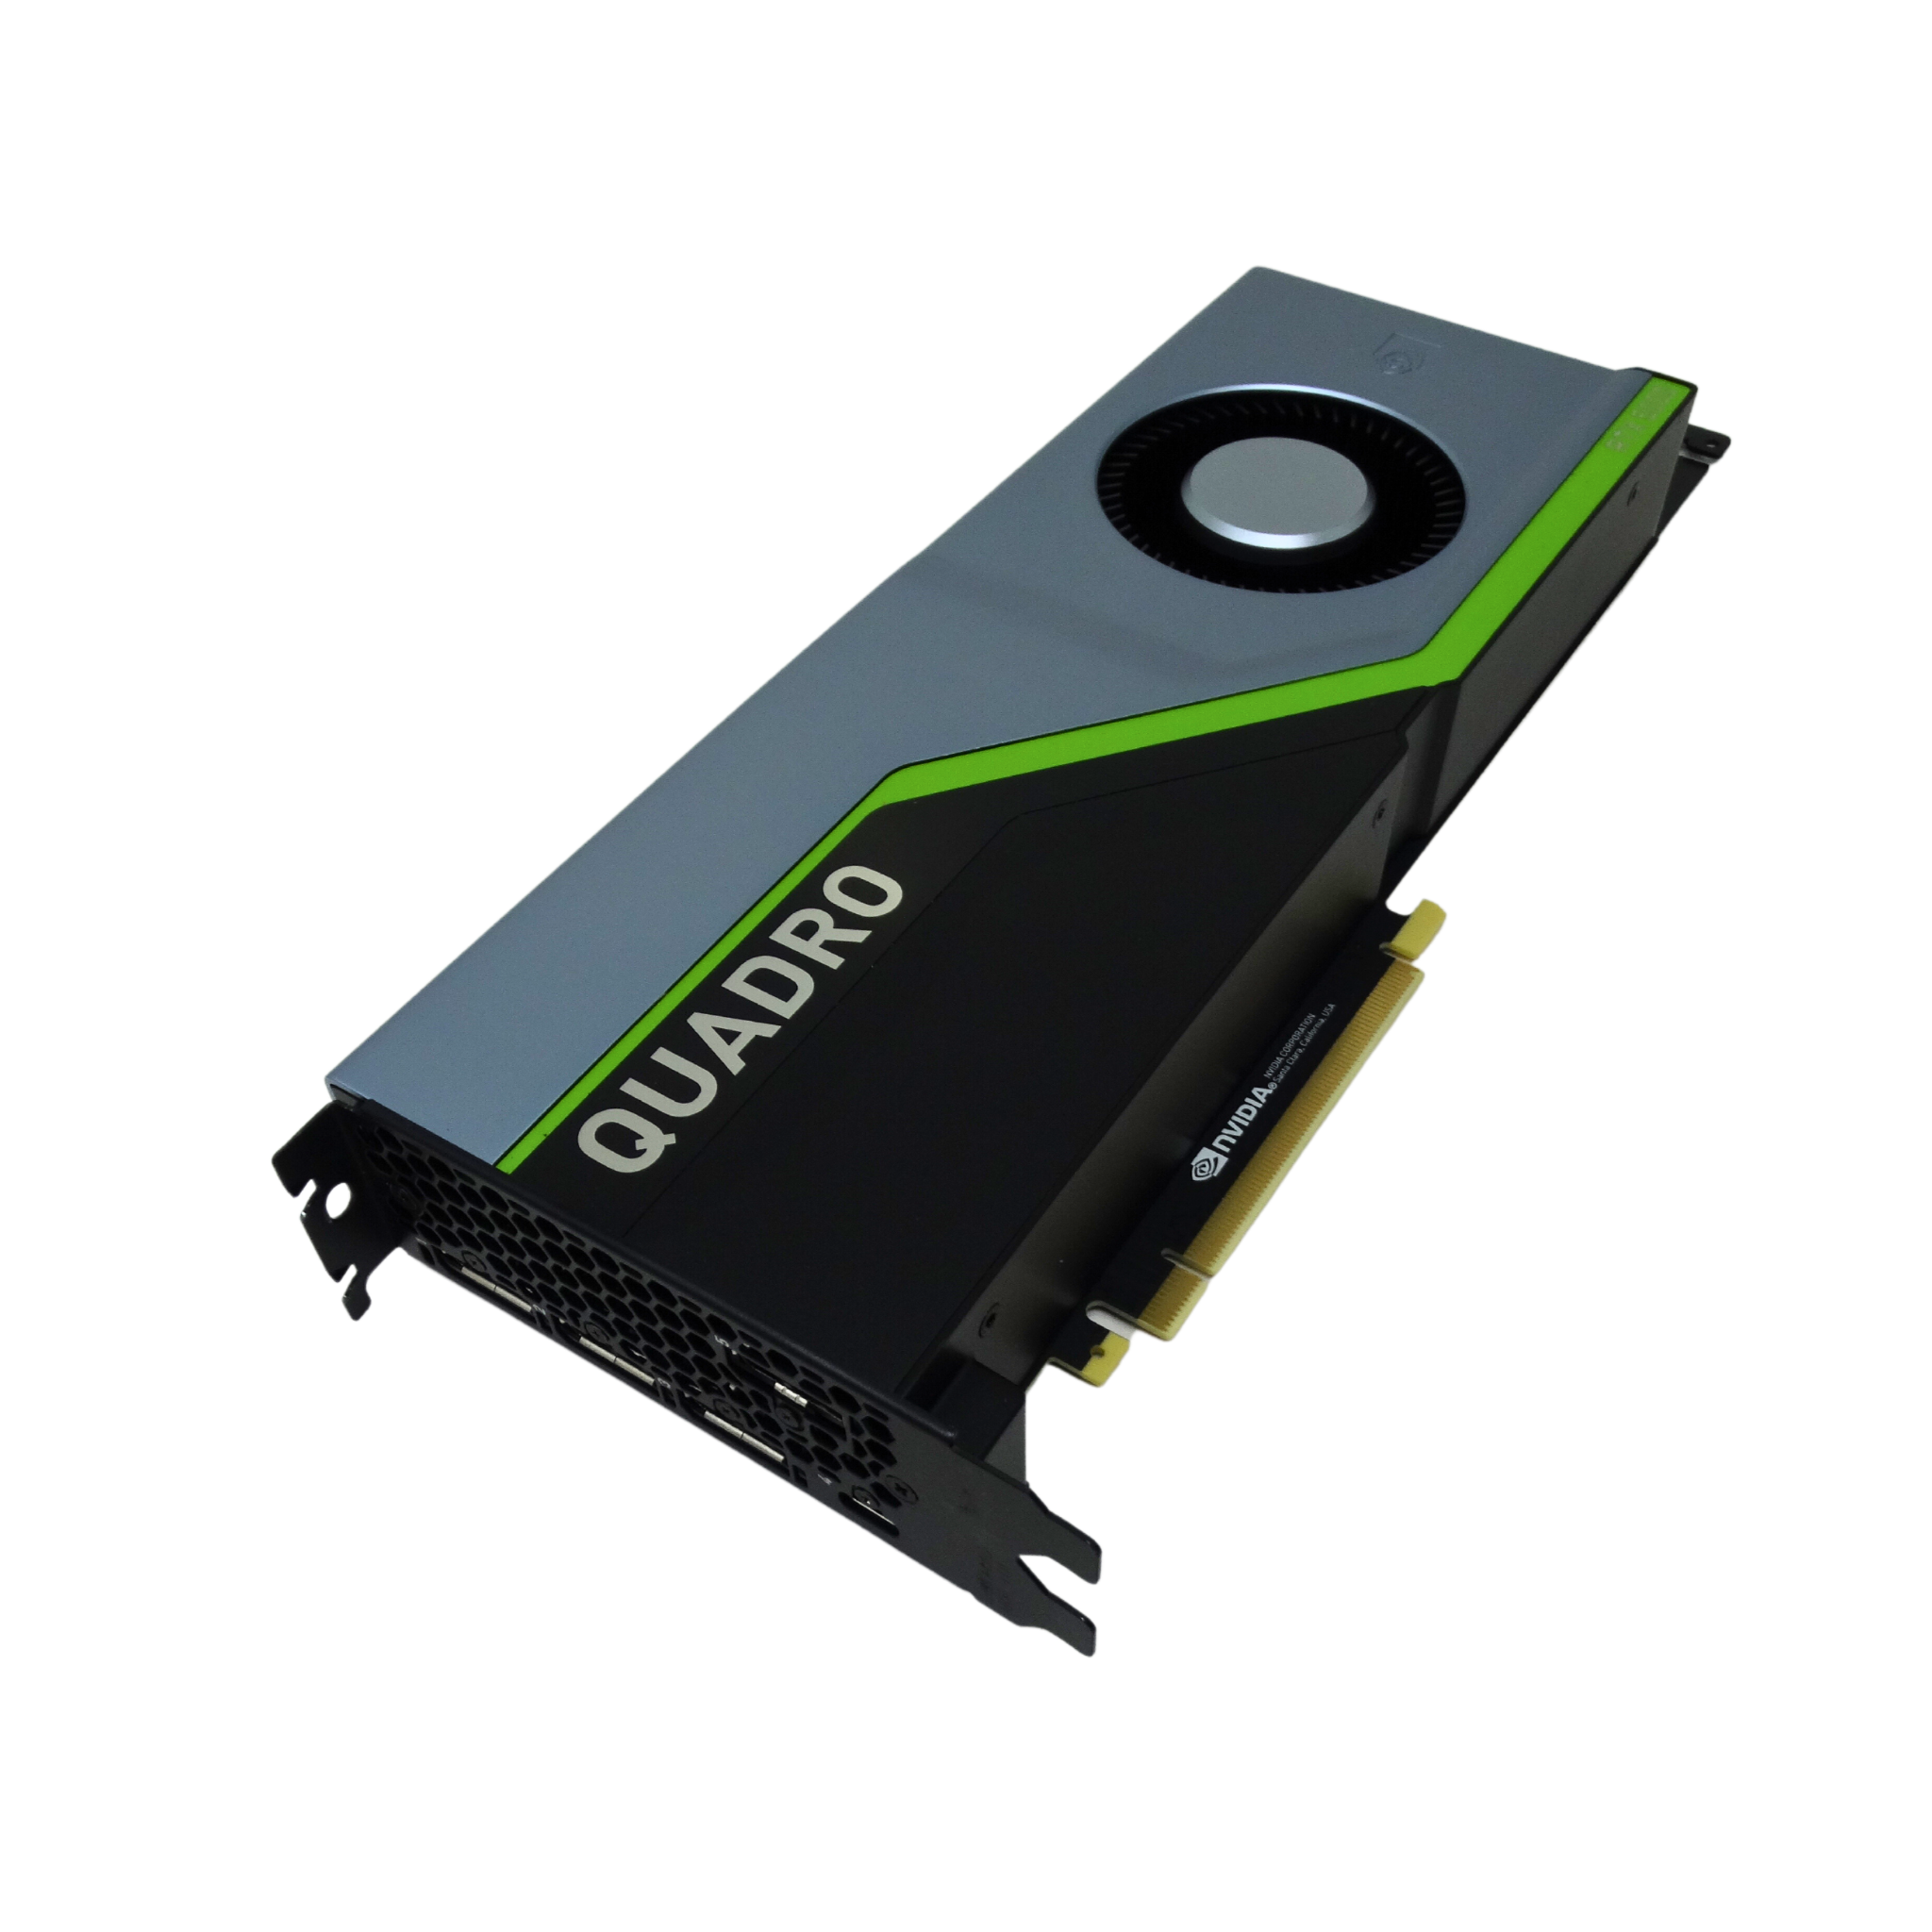 Dell Nvidia Quadro RTX 5000 16GB GDDR6 PCIe 3.0 x16 GPU Graphics Card (490-BFEV)